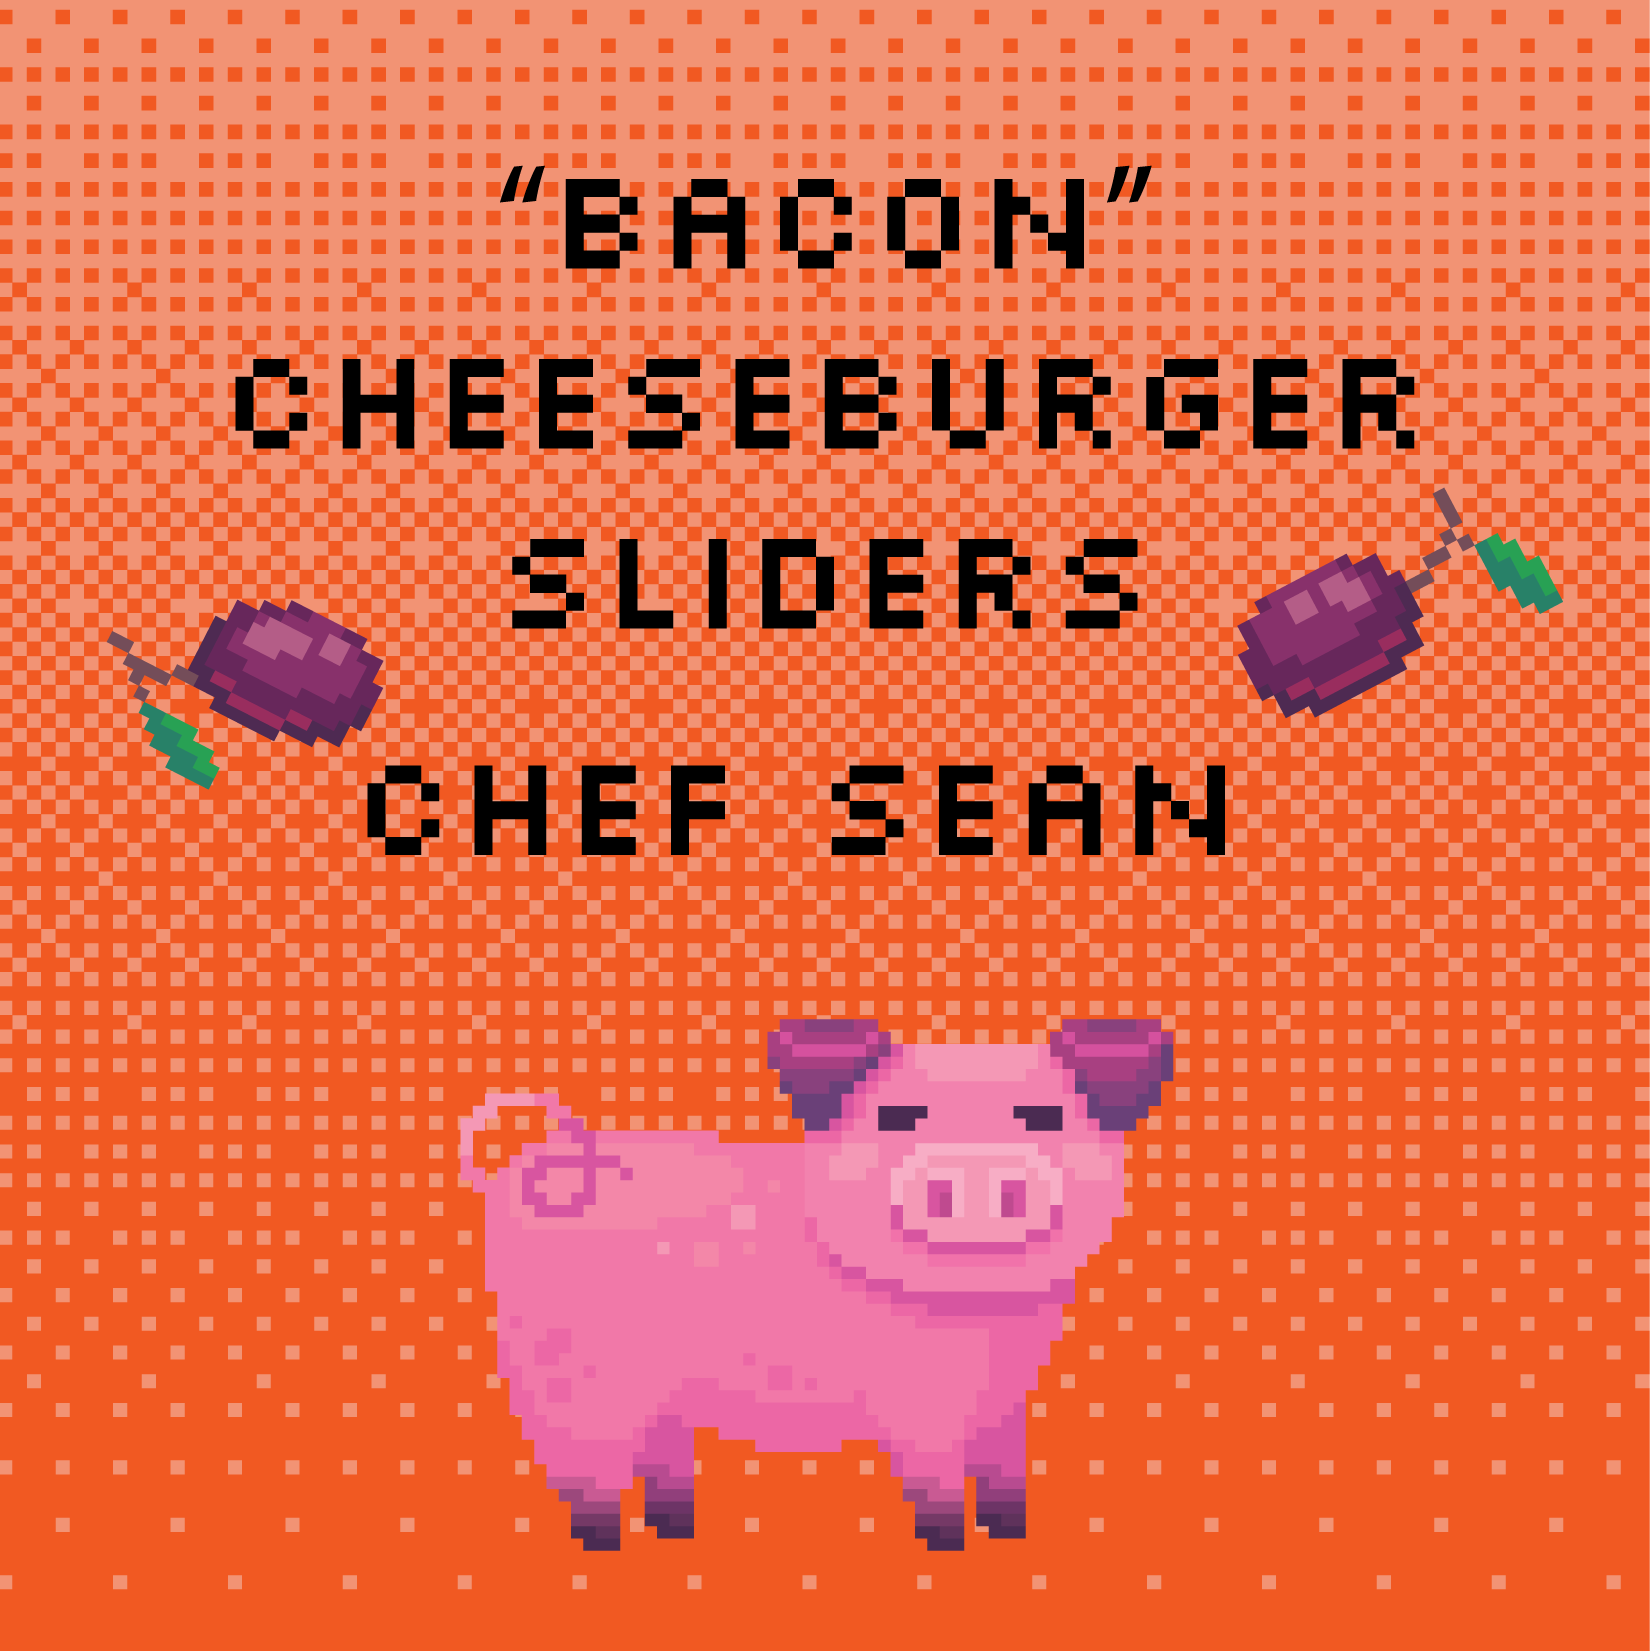 "bacon" cheeseburger sliders by chef Sean